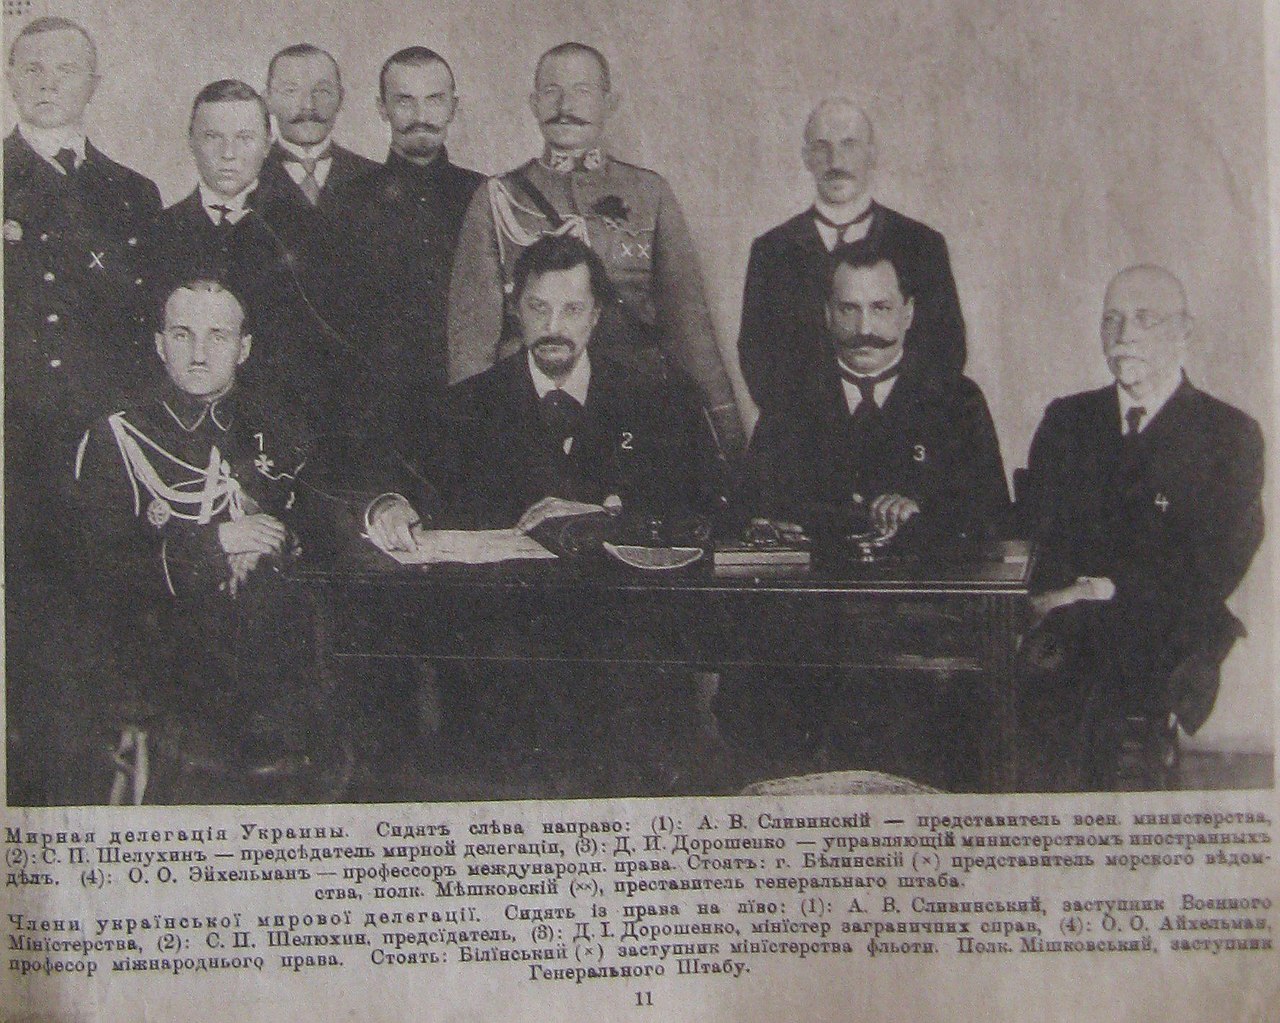 Ukrainian delegation for peace talks with Russian Soviet Republic 1918 Oko magazine 1918